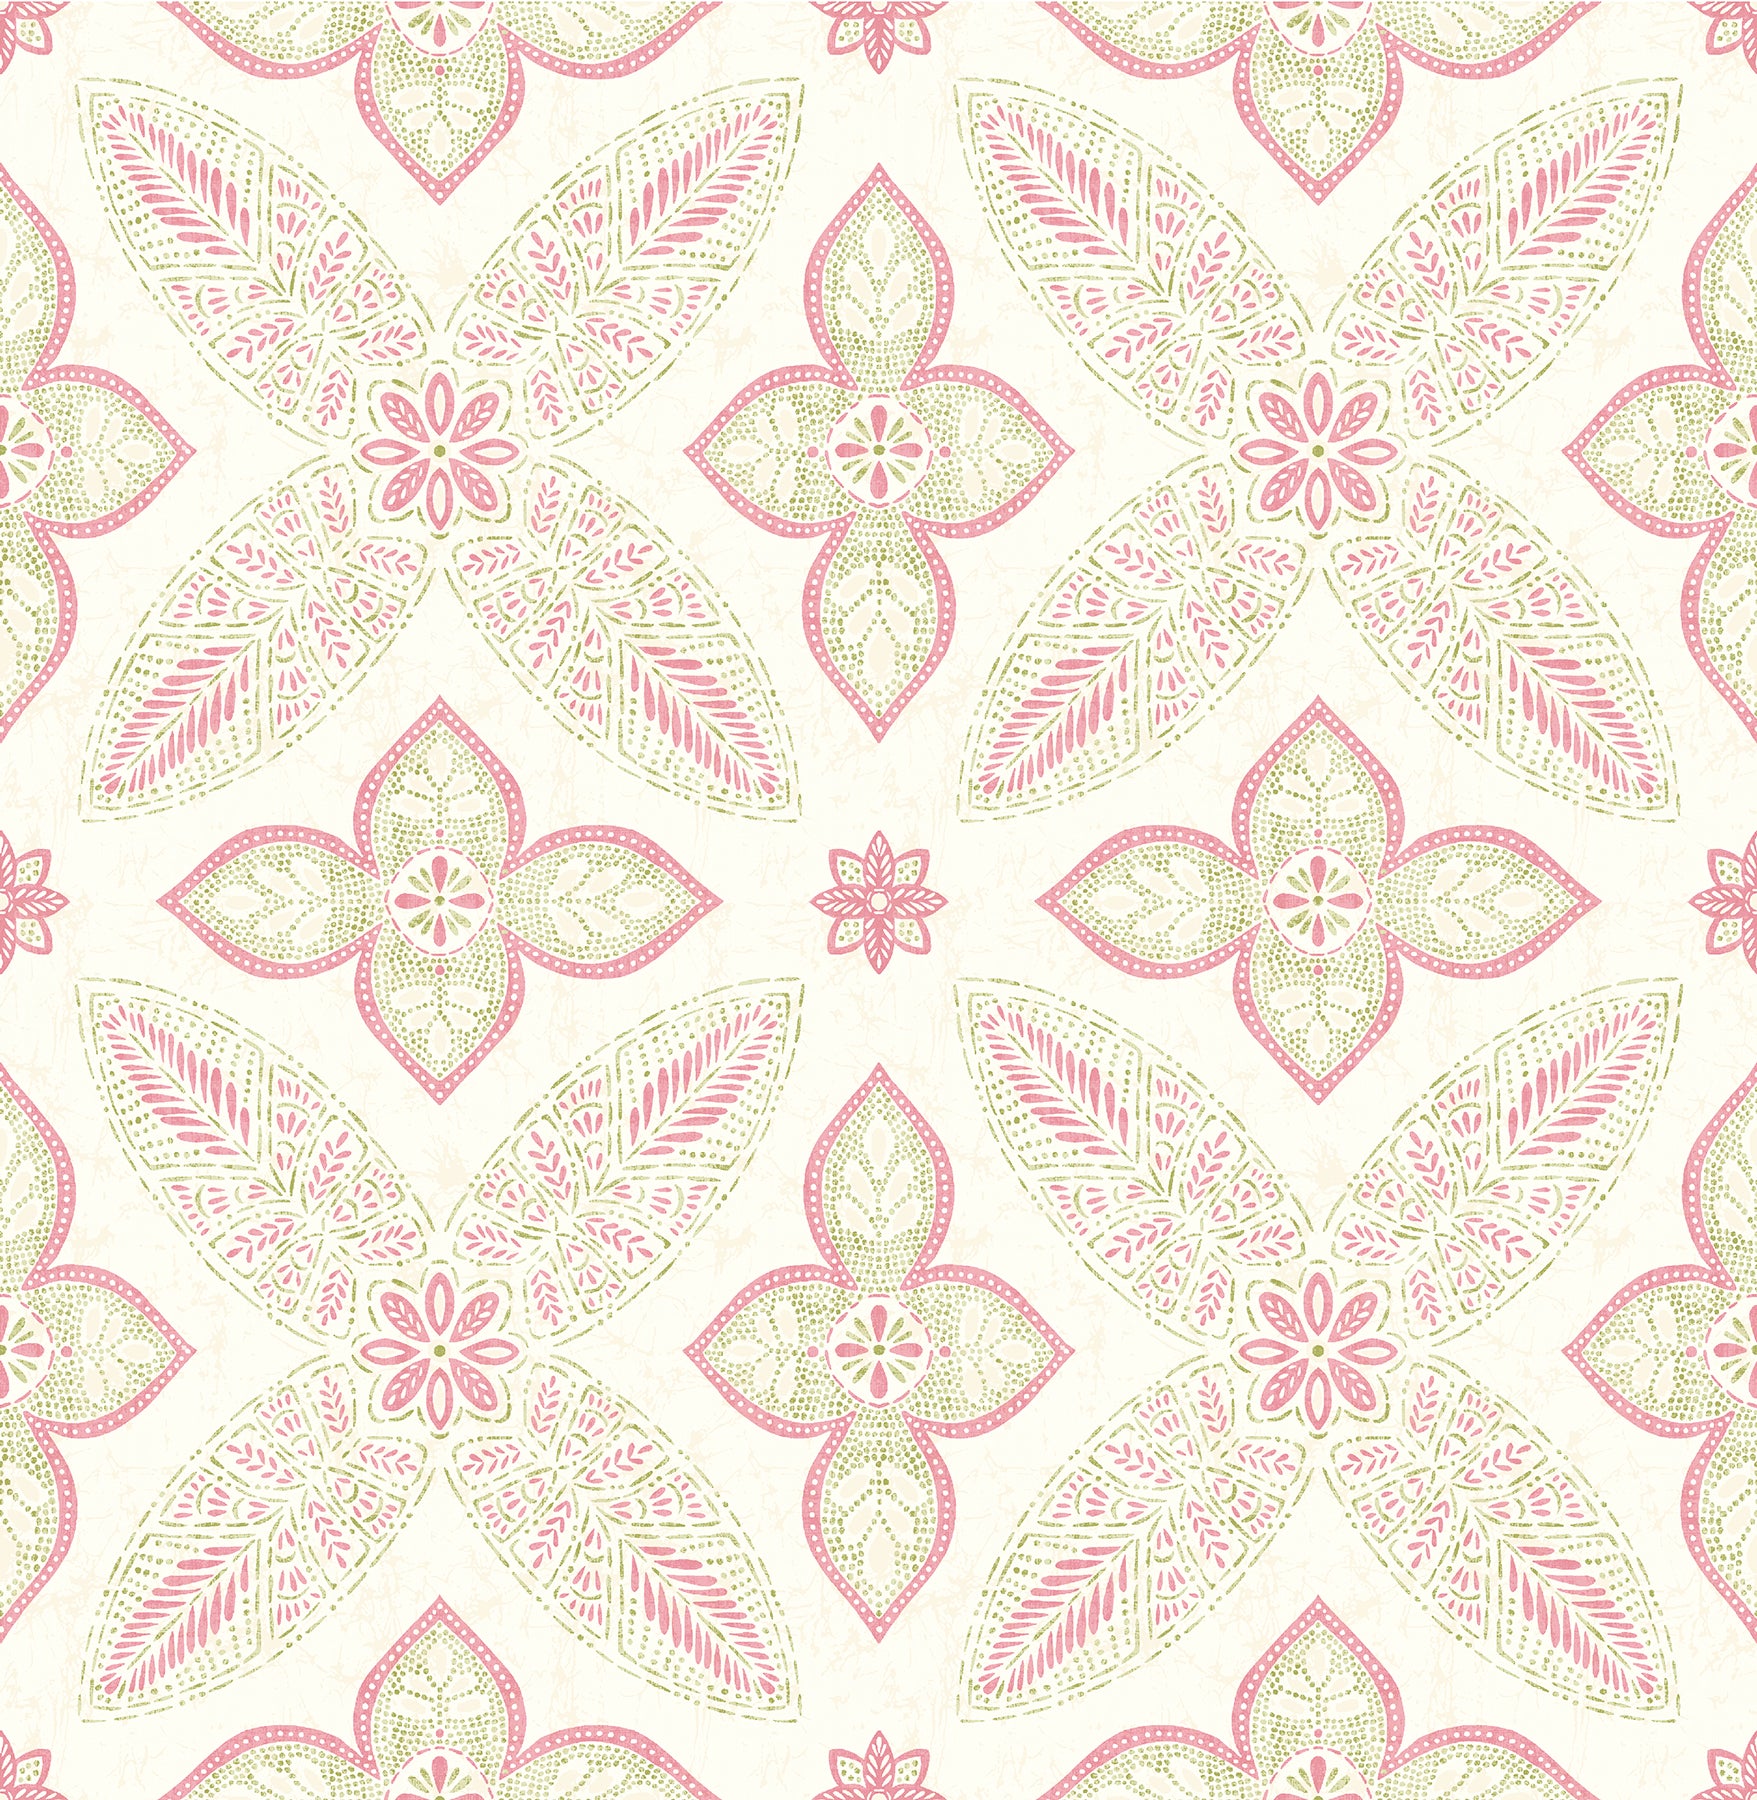 Save on 1014-001826 Kismet Pink Off Beat Ethnic Pink Geometric Floral Wallpaper A Street Prints Wallpaper